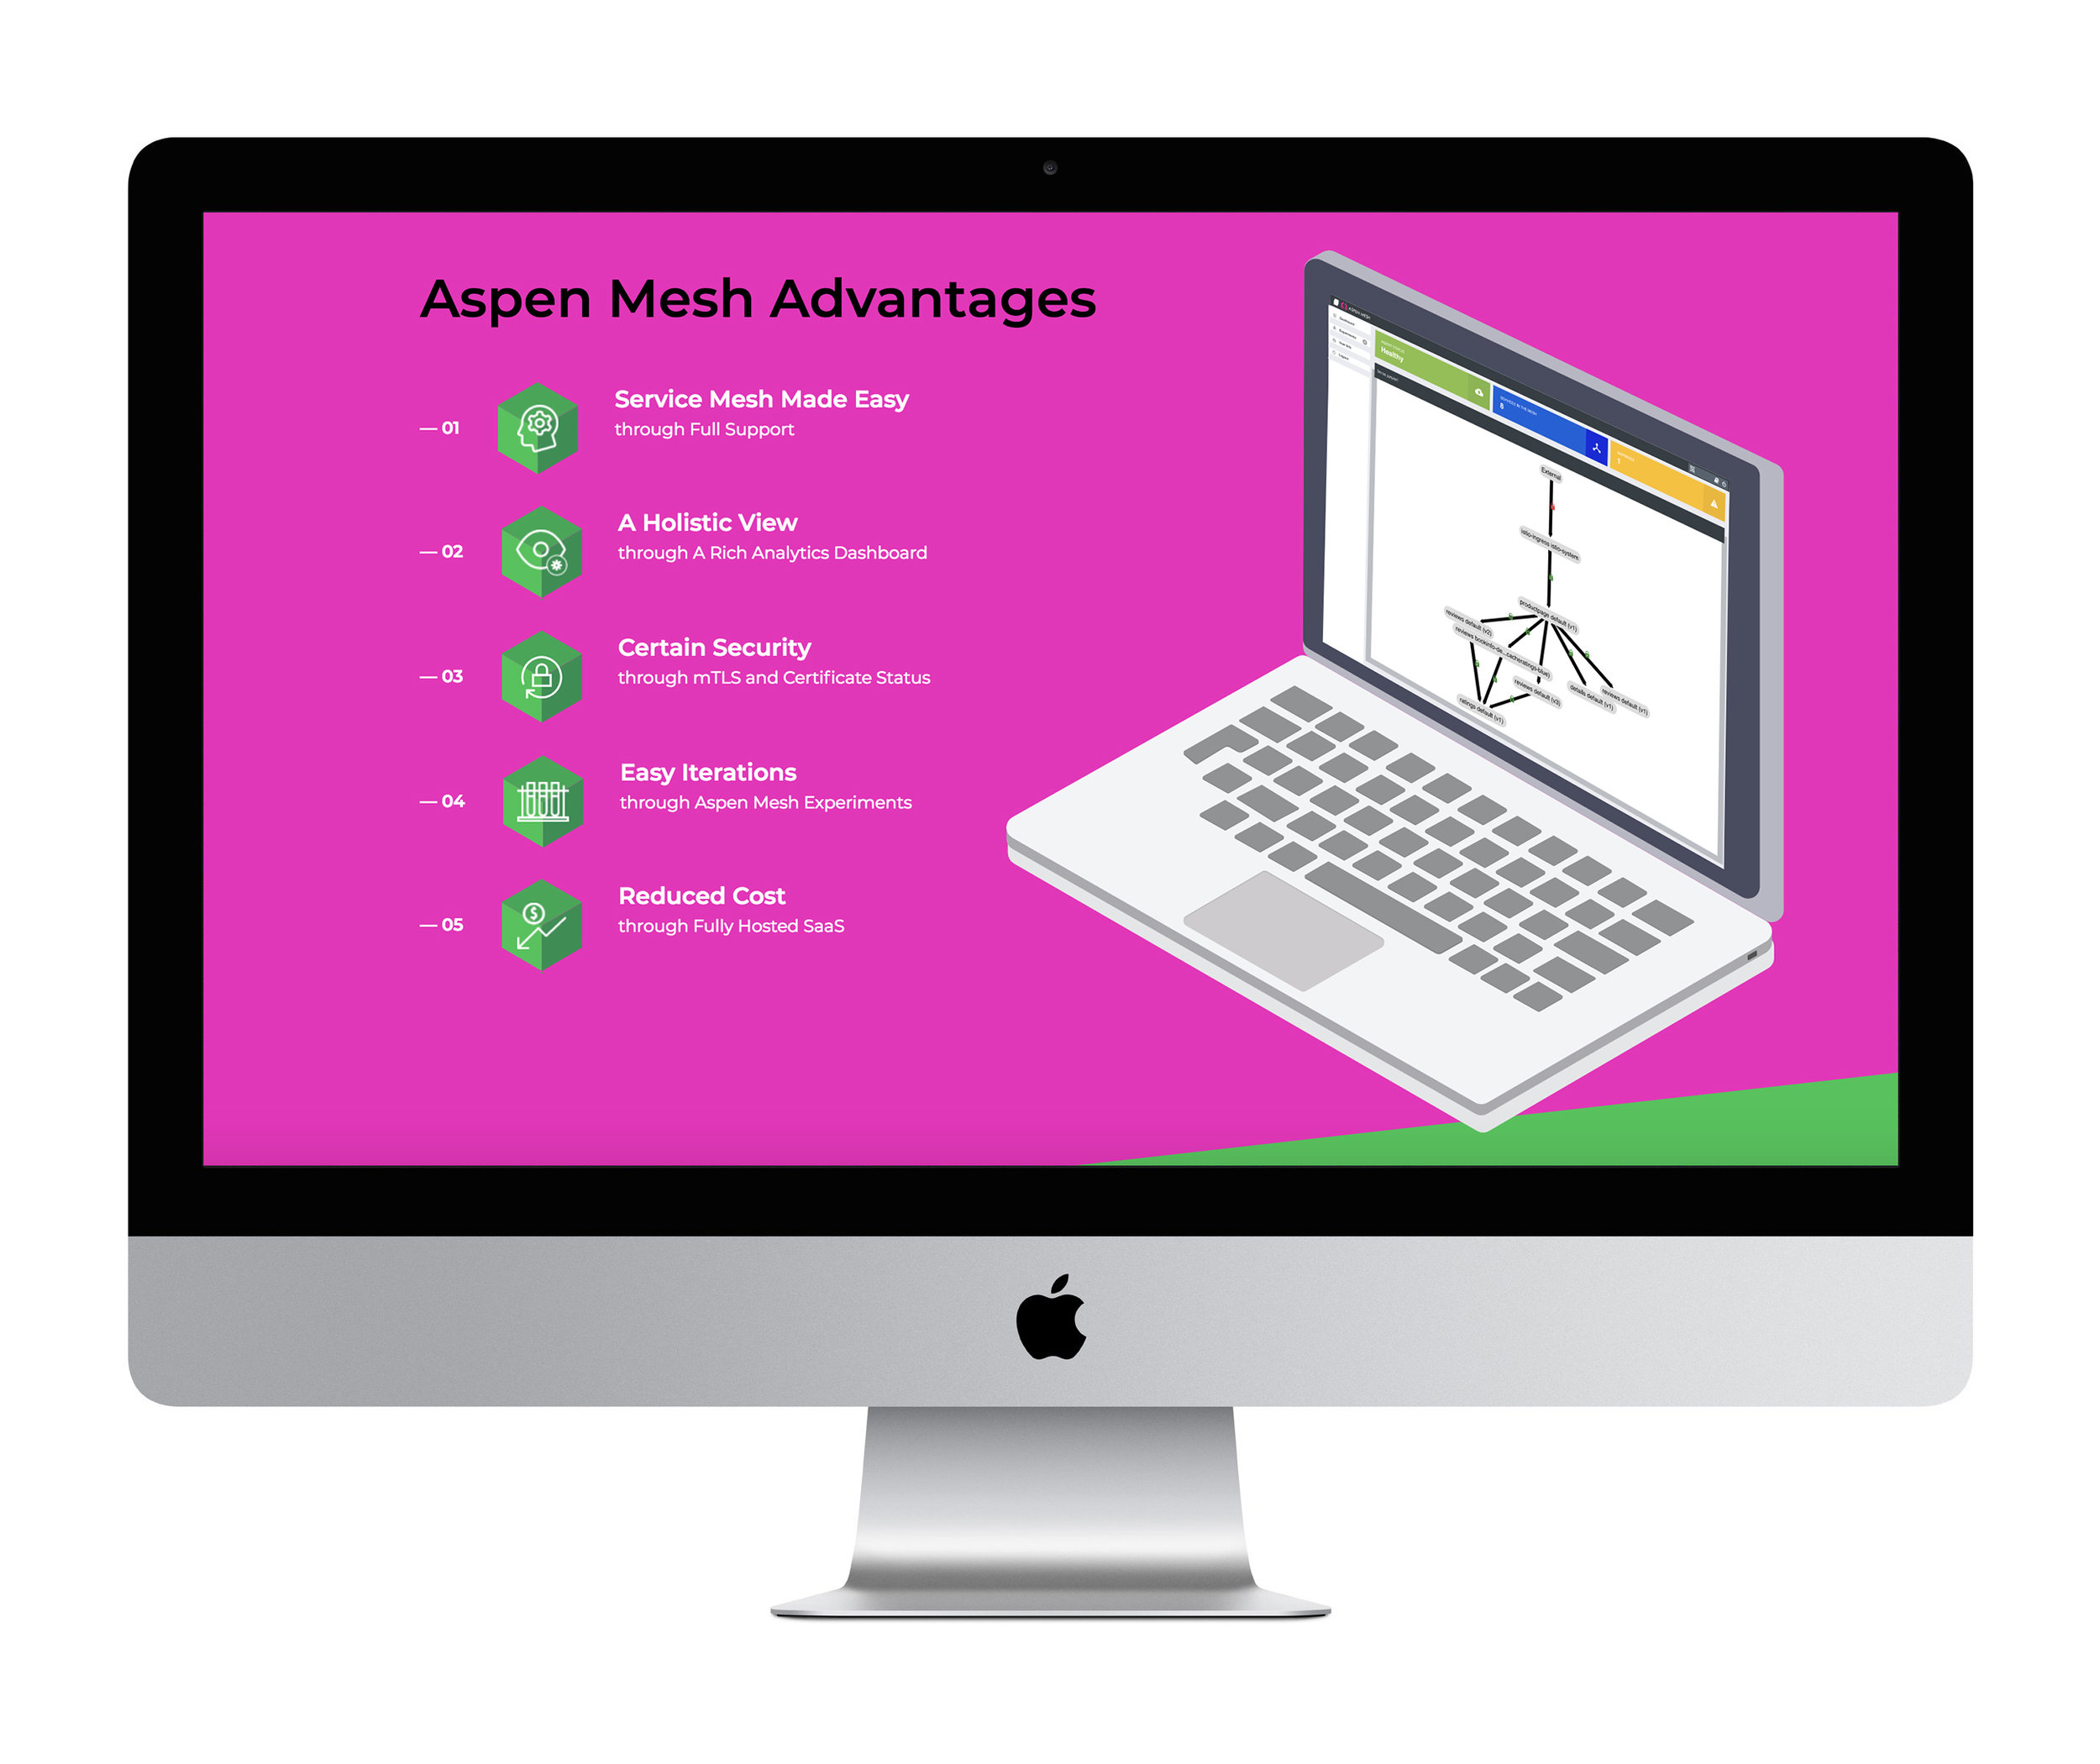 Jean Website - iMac - 20181012a - Aspen Mesh Advantages.jpg